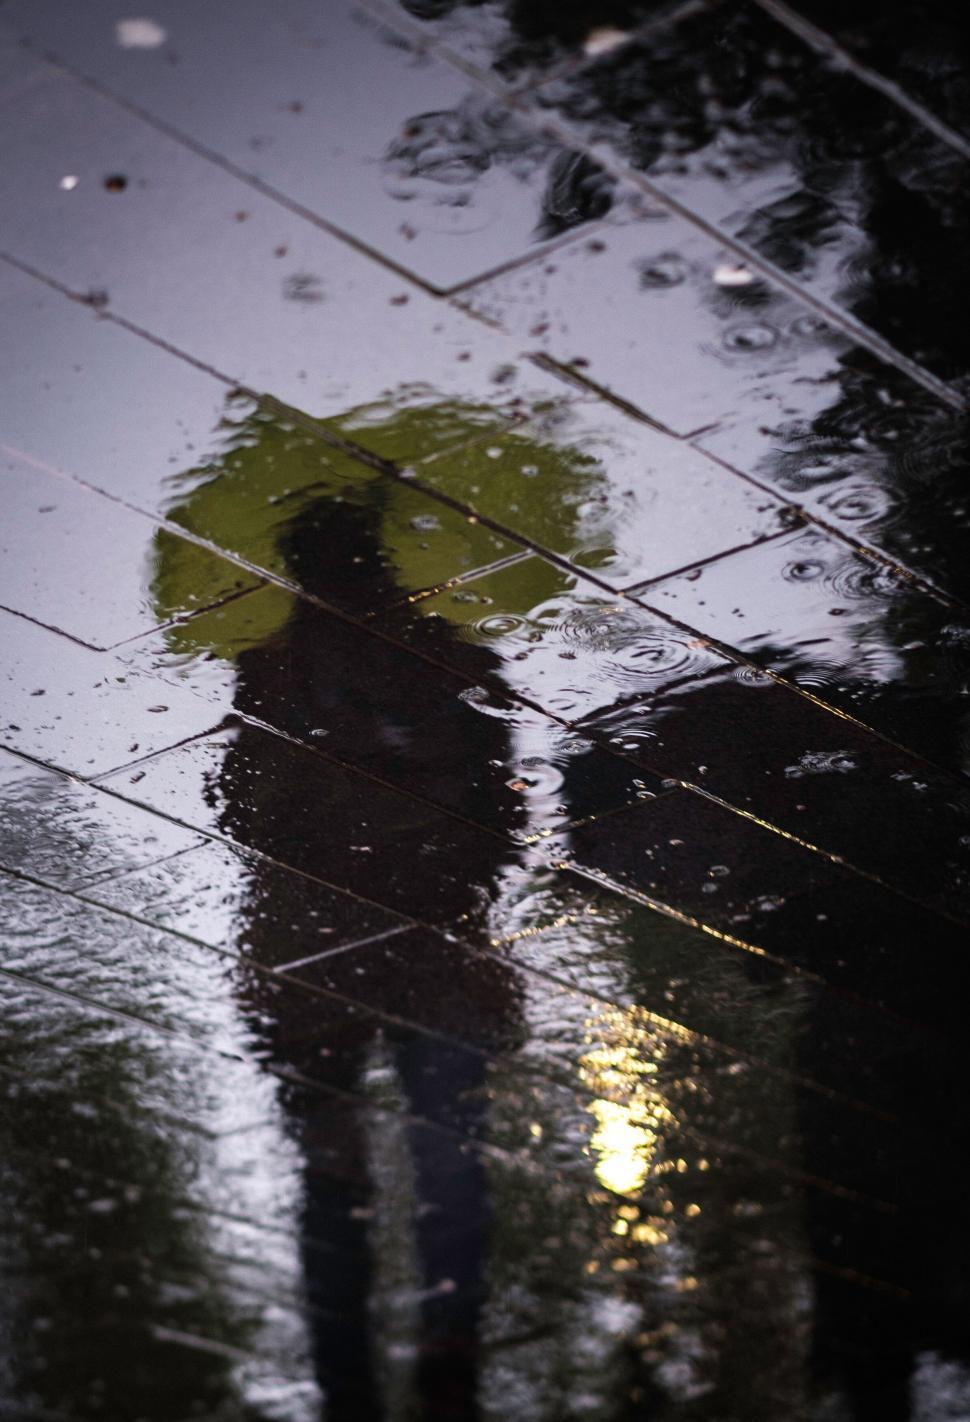 Free Image of Rainy pavement reflection of yellow umbrella 